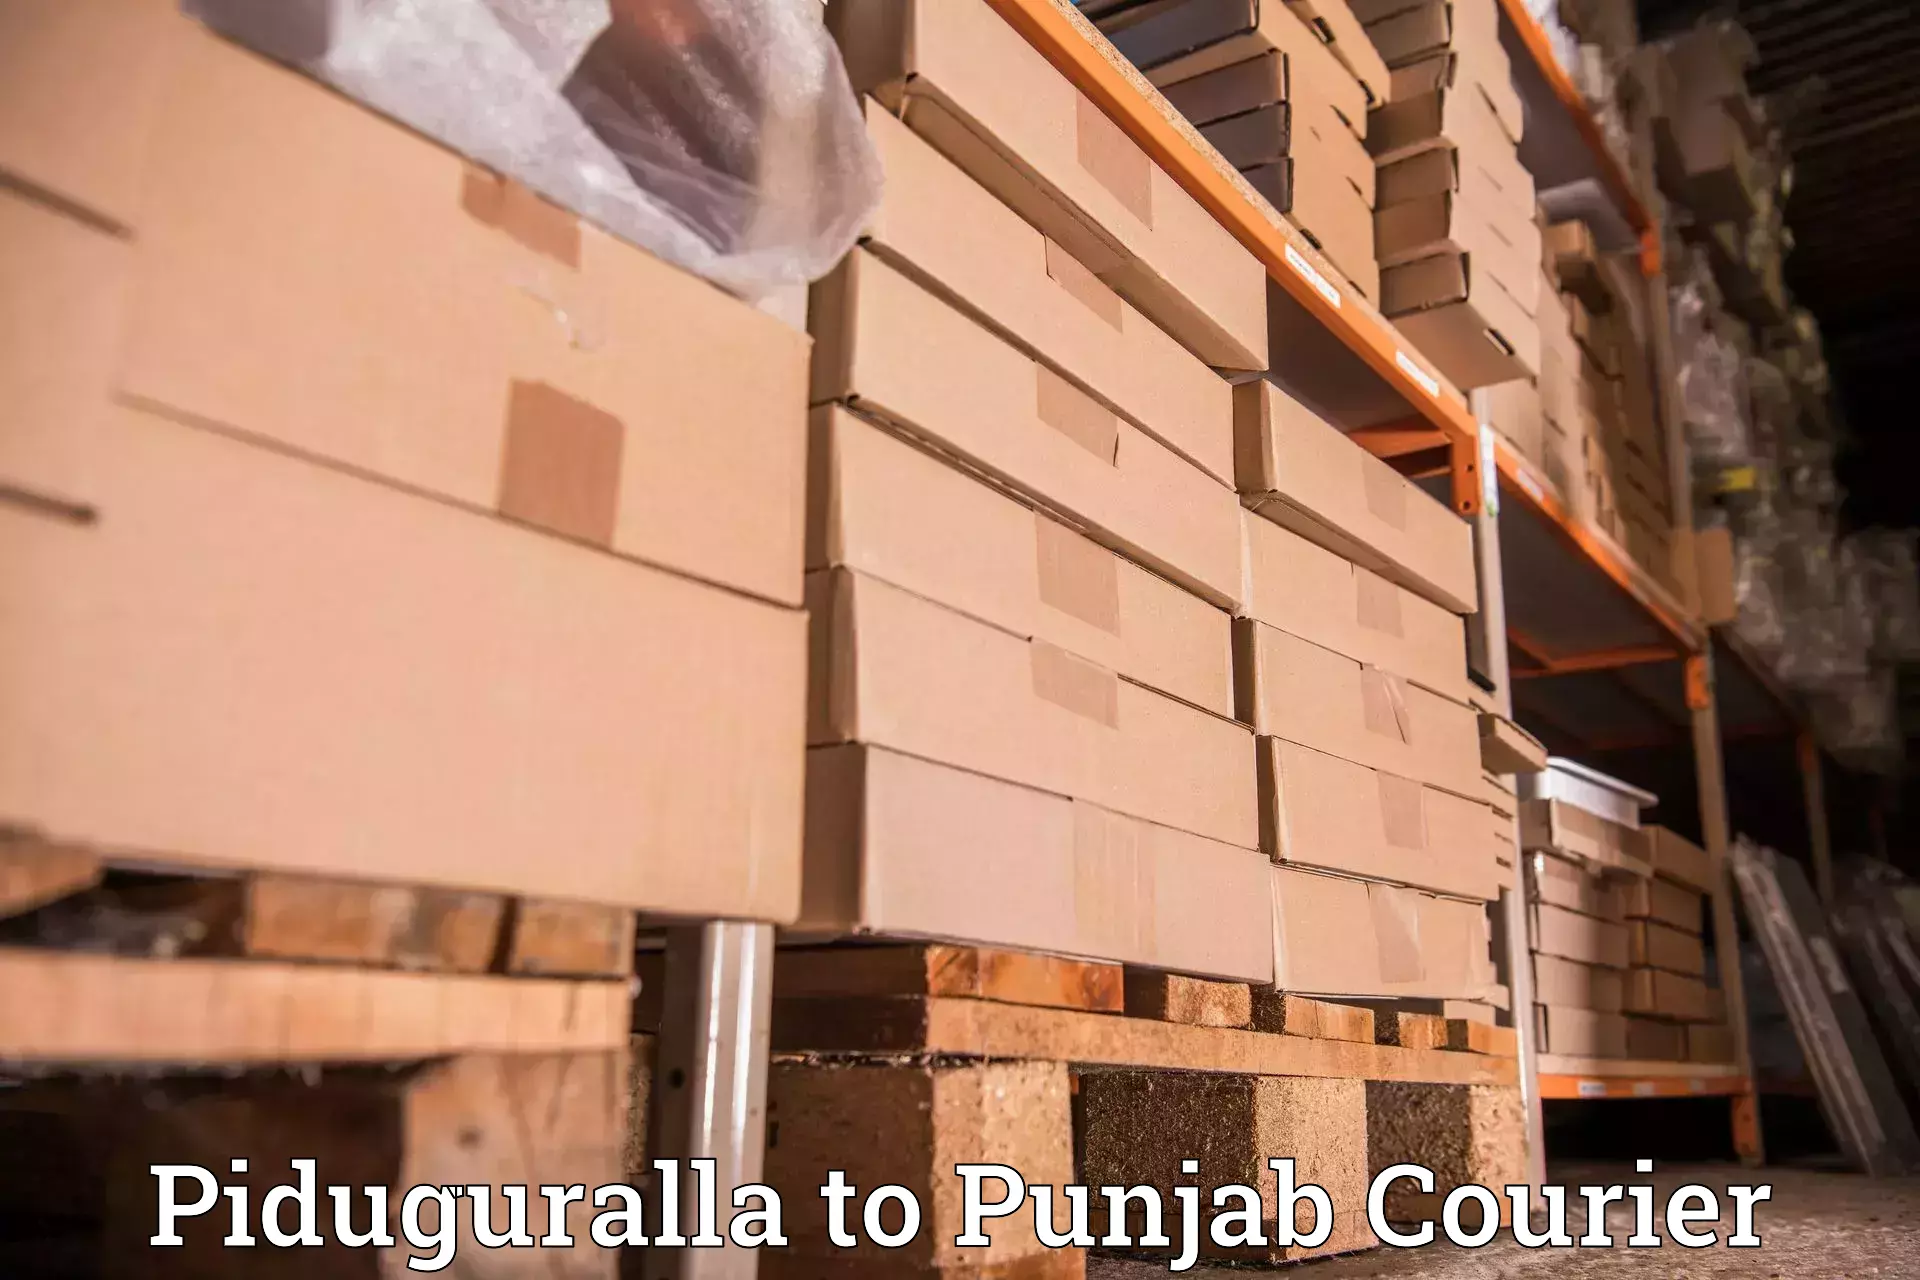 Quick dispatch service Piduguralla to Firozpur